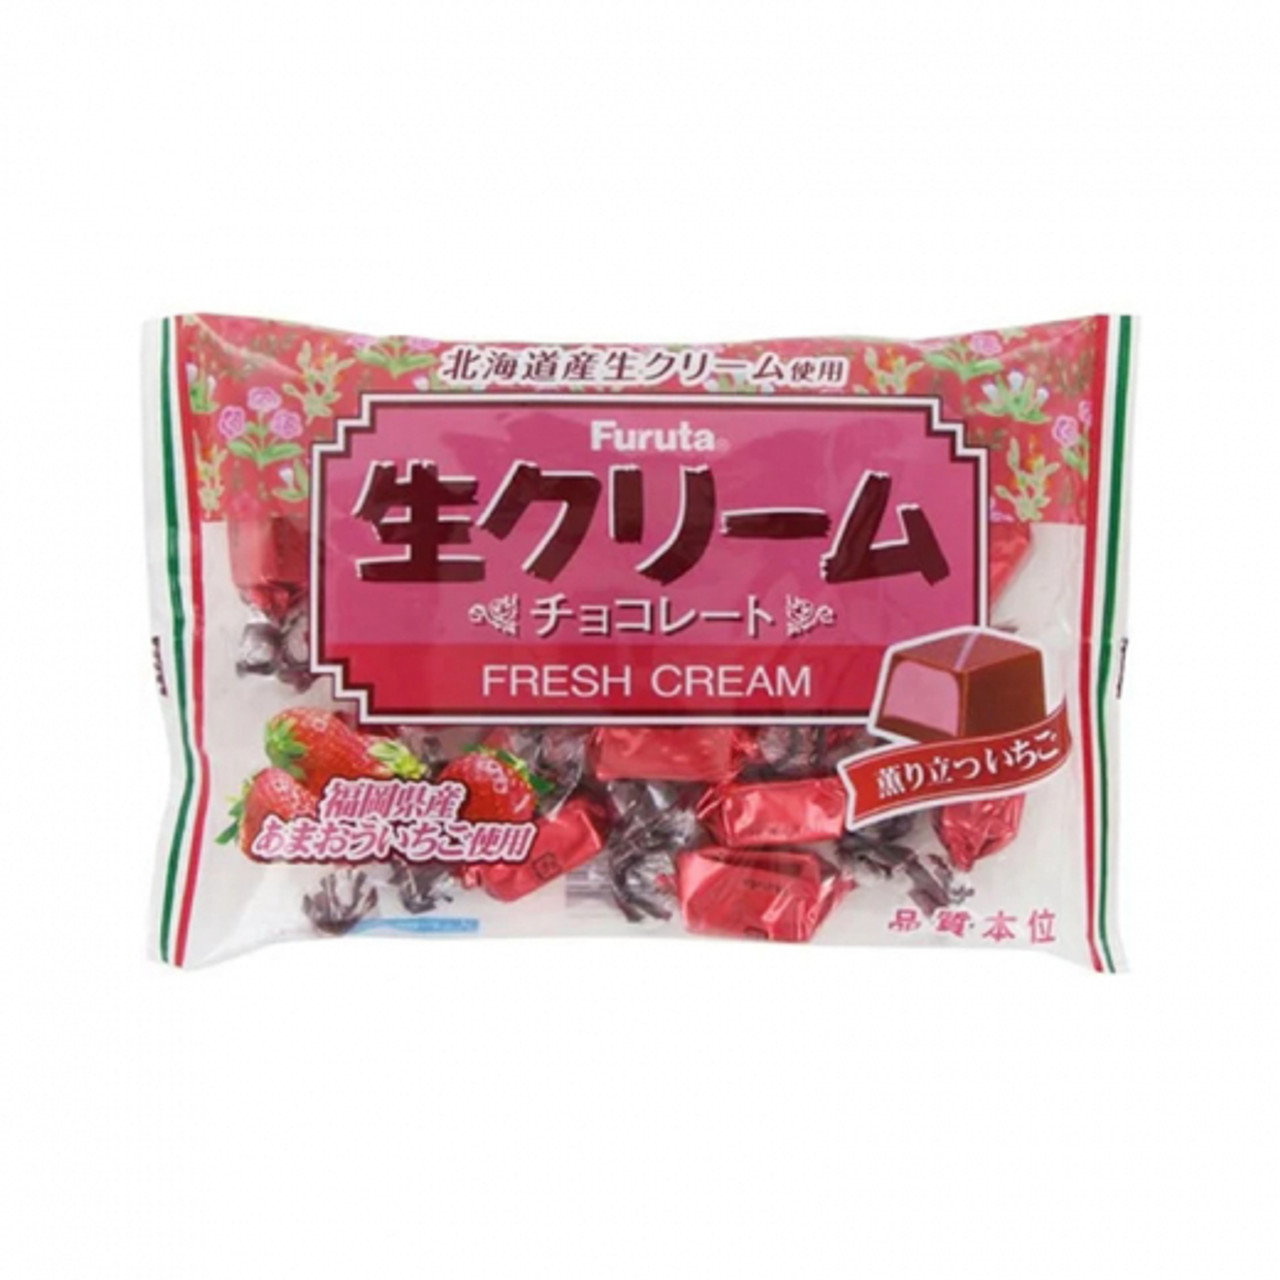 Furuta Cream Chocolate Strawberry 18pcs £ 3.01/Furuta 鲜奶油草莓巧克力 18个